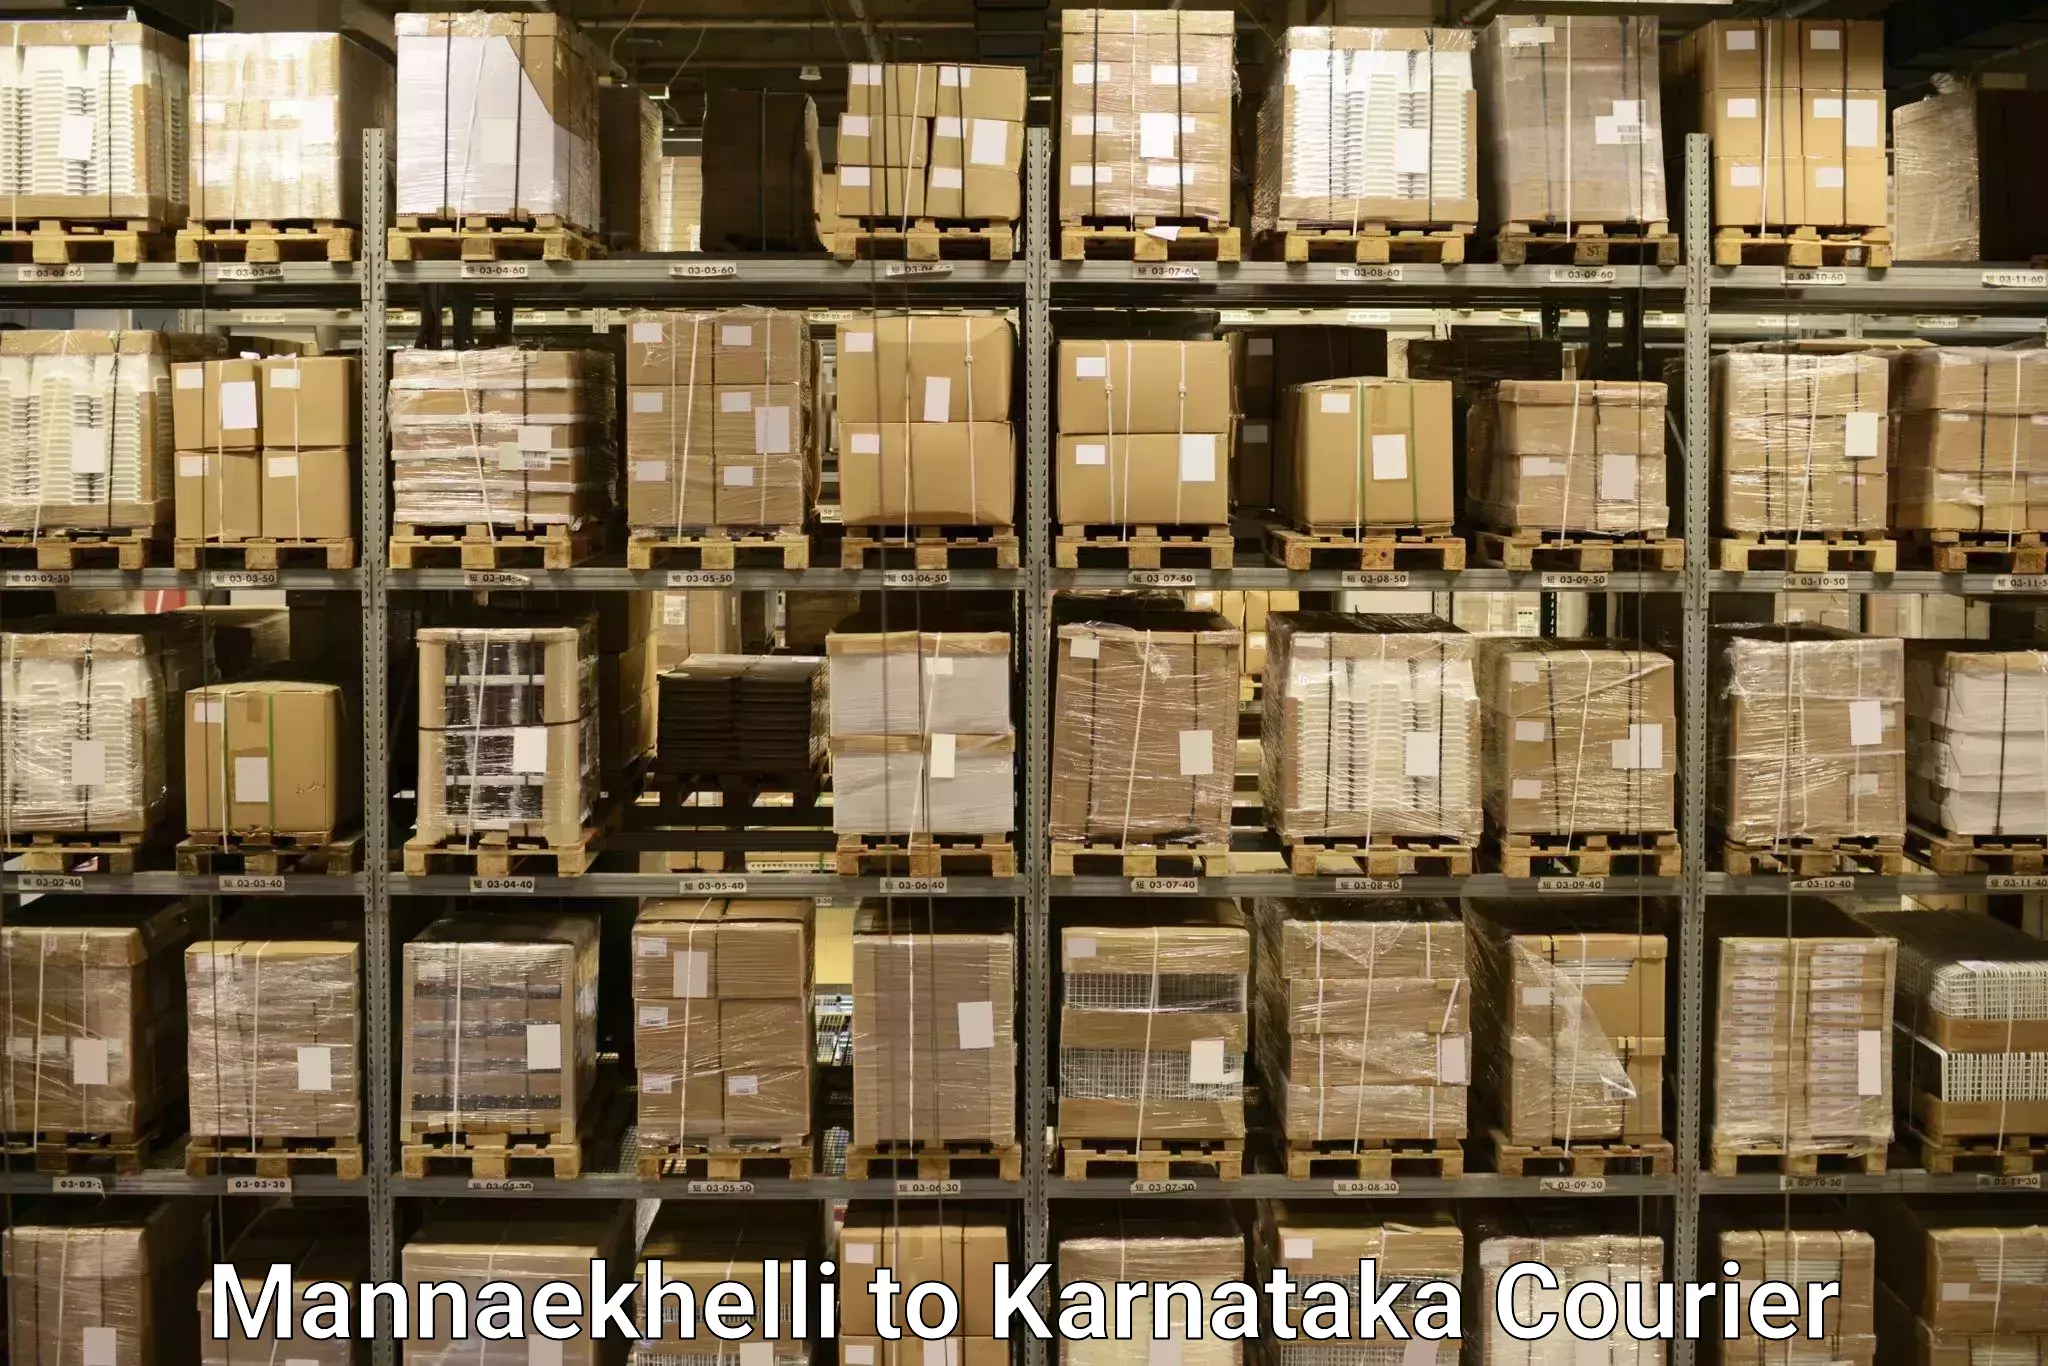 Baggage delivery technology Mannaekhelli to Karnataka